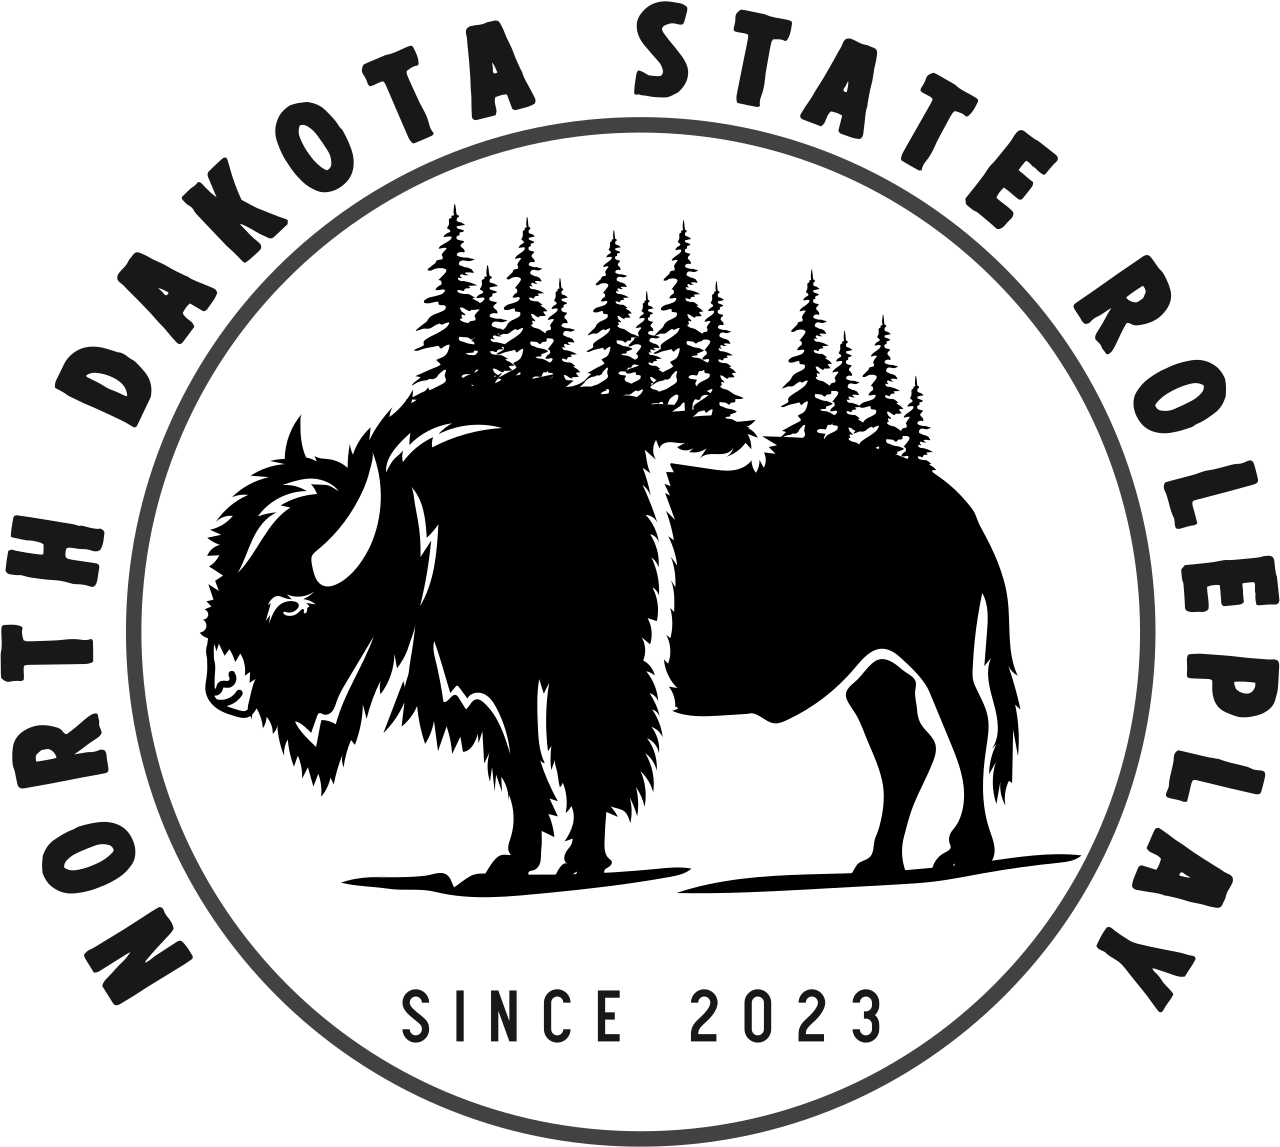 NORTH DAKOTA STATE ROLEPLAY's logo